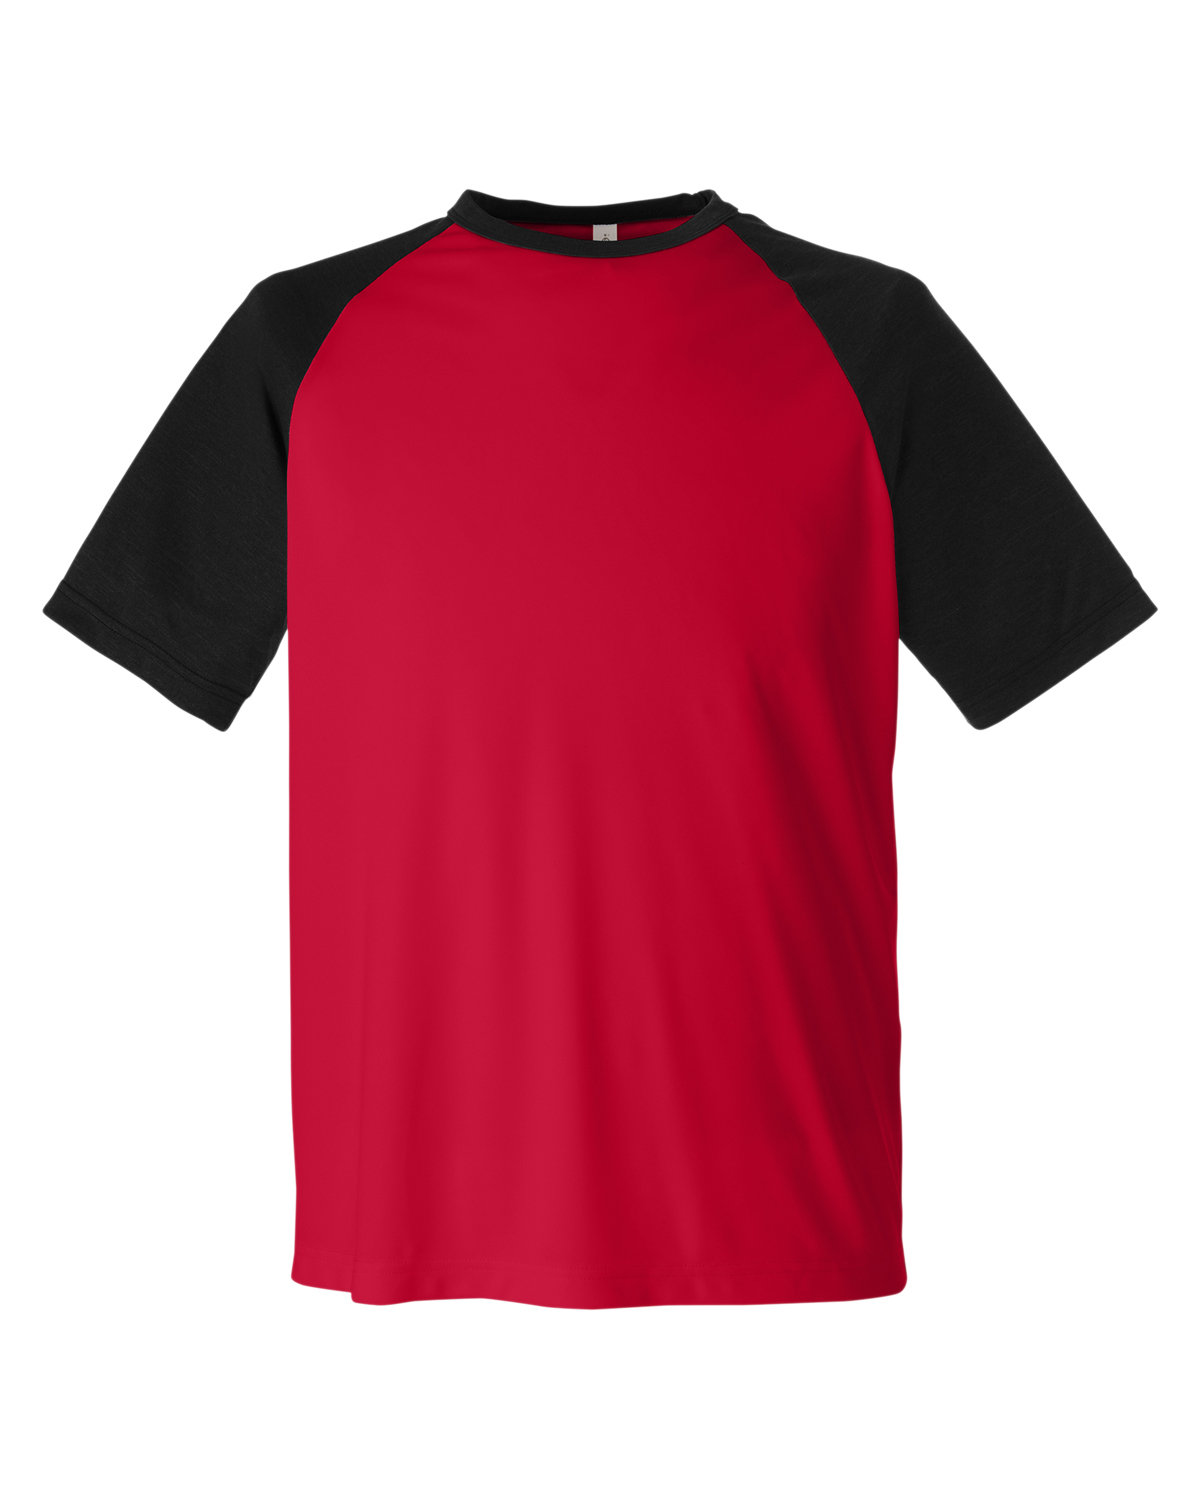 Picture of Team 365 Unisex Zone Colorblock Raglan T-Shirt